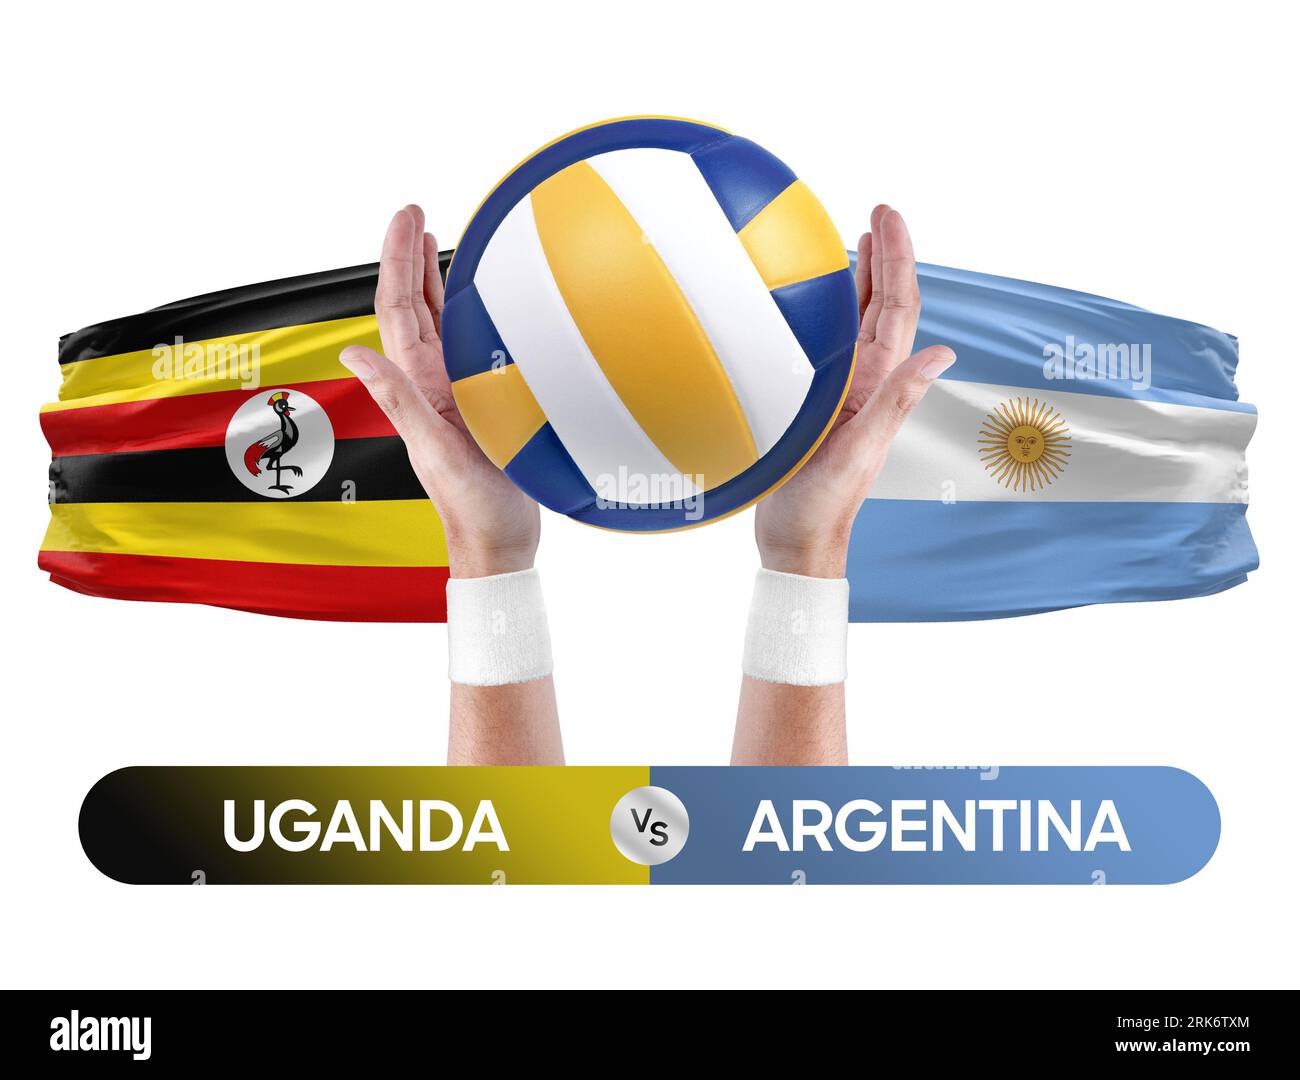 Uganda gegen Argentinien Nationalmannschaften Volleyball Volleyball-Volleyball-Spiel-Wettkampf-Konzept. Stockfoto